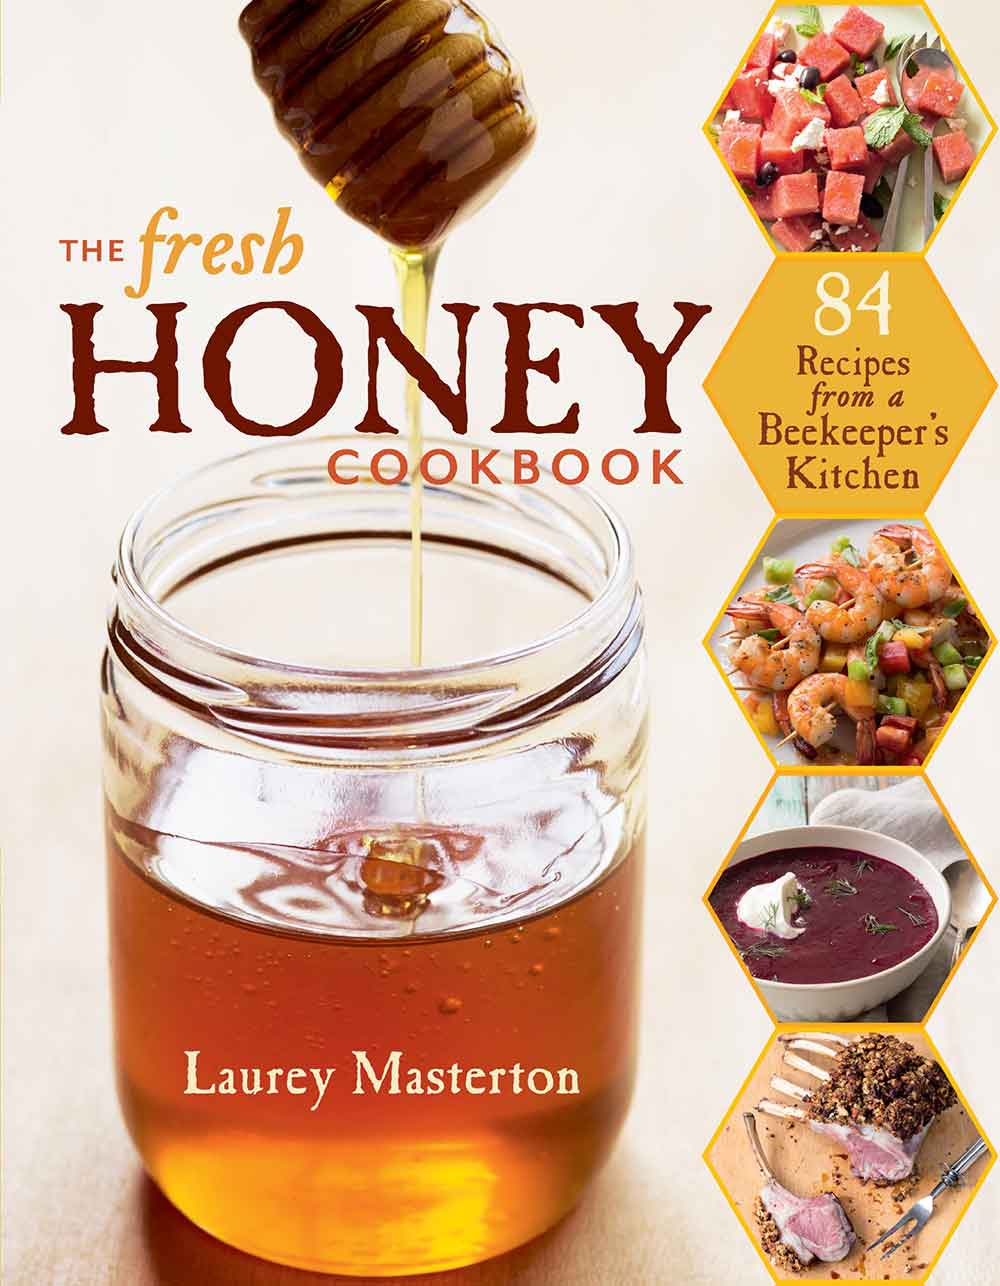 Bookcover for the Fresh Honey Cookbook